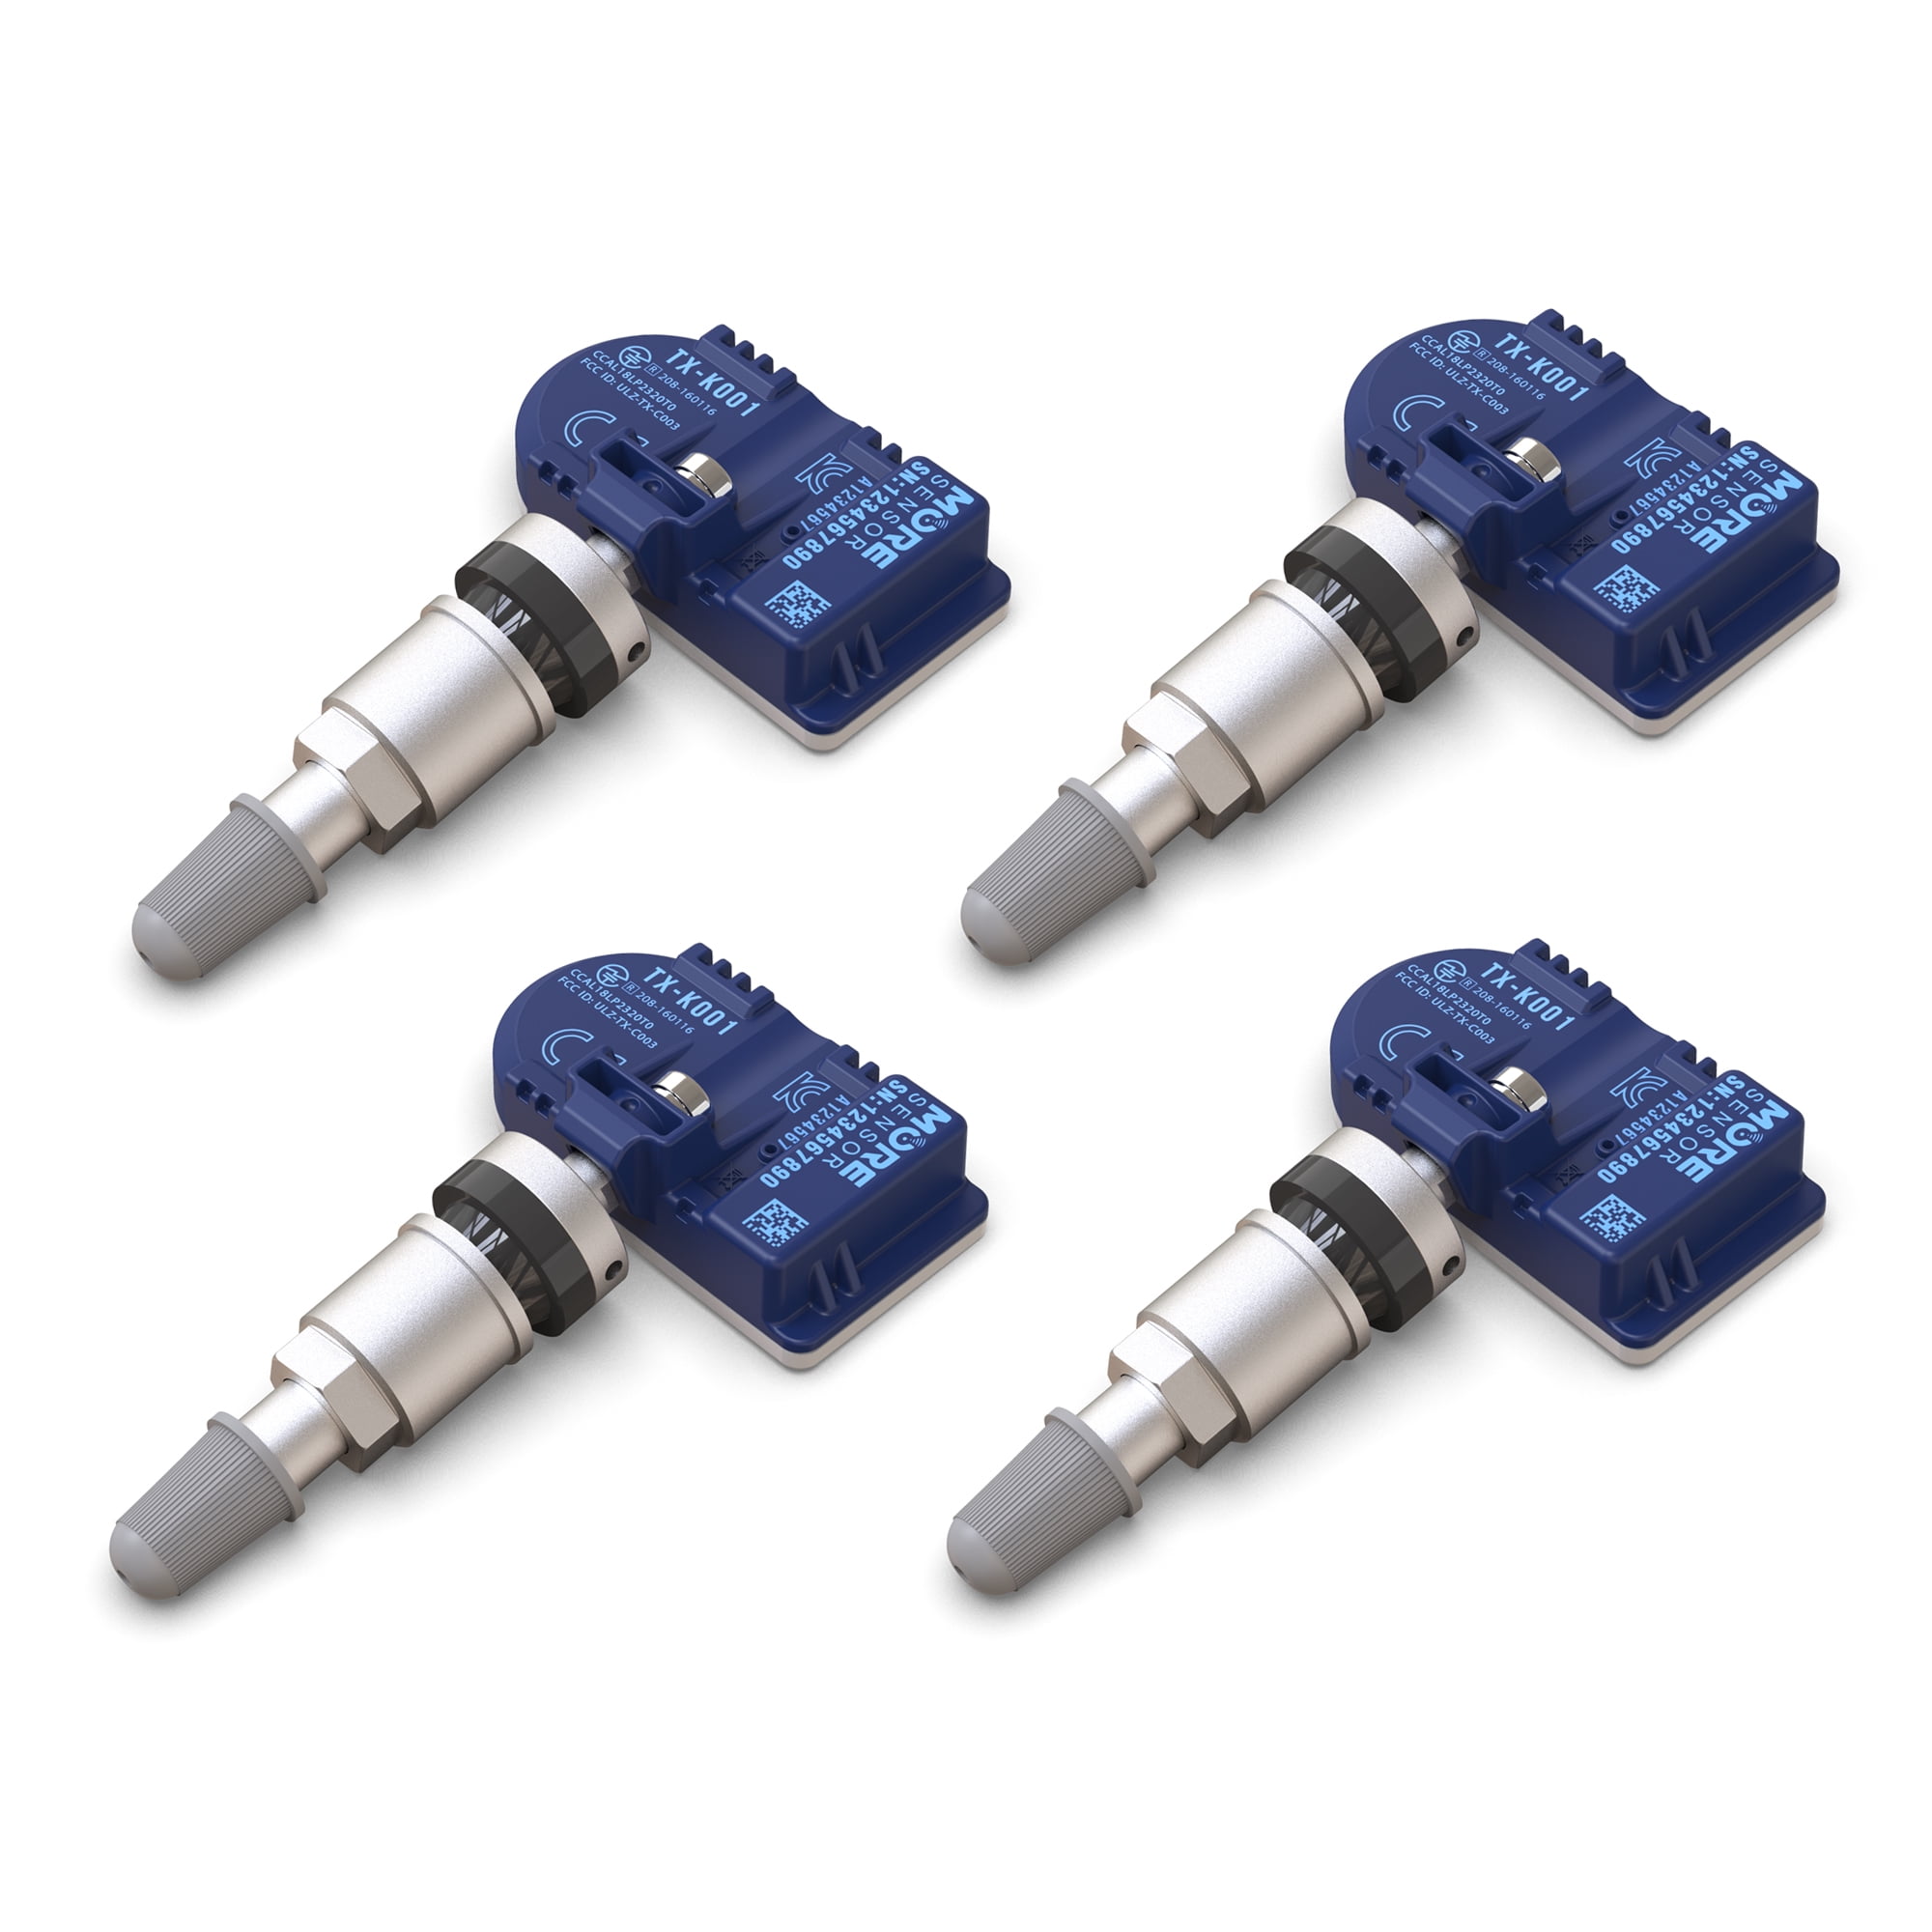 DirectFit Set of 4 TPMS Sensor Kit for GMC Chevy HUMMER OEM# 15122618  315 Mhz 